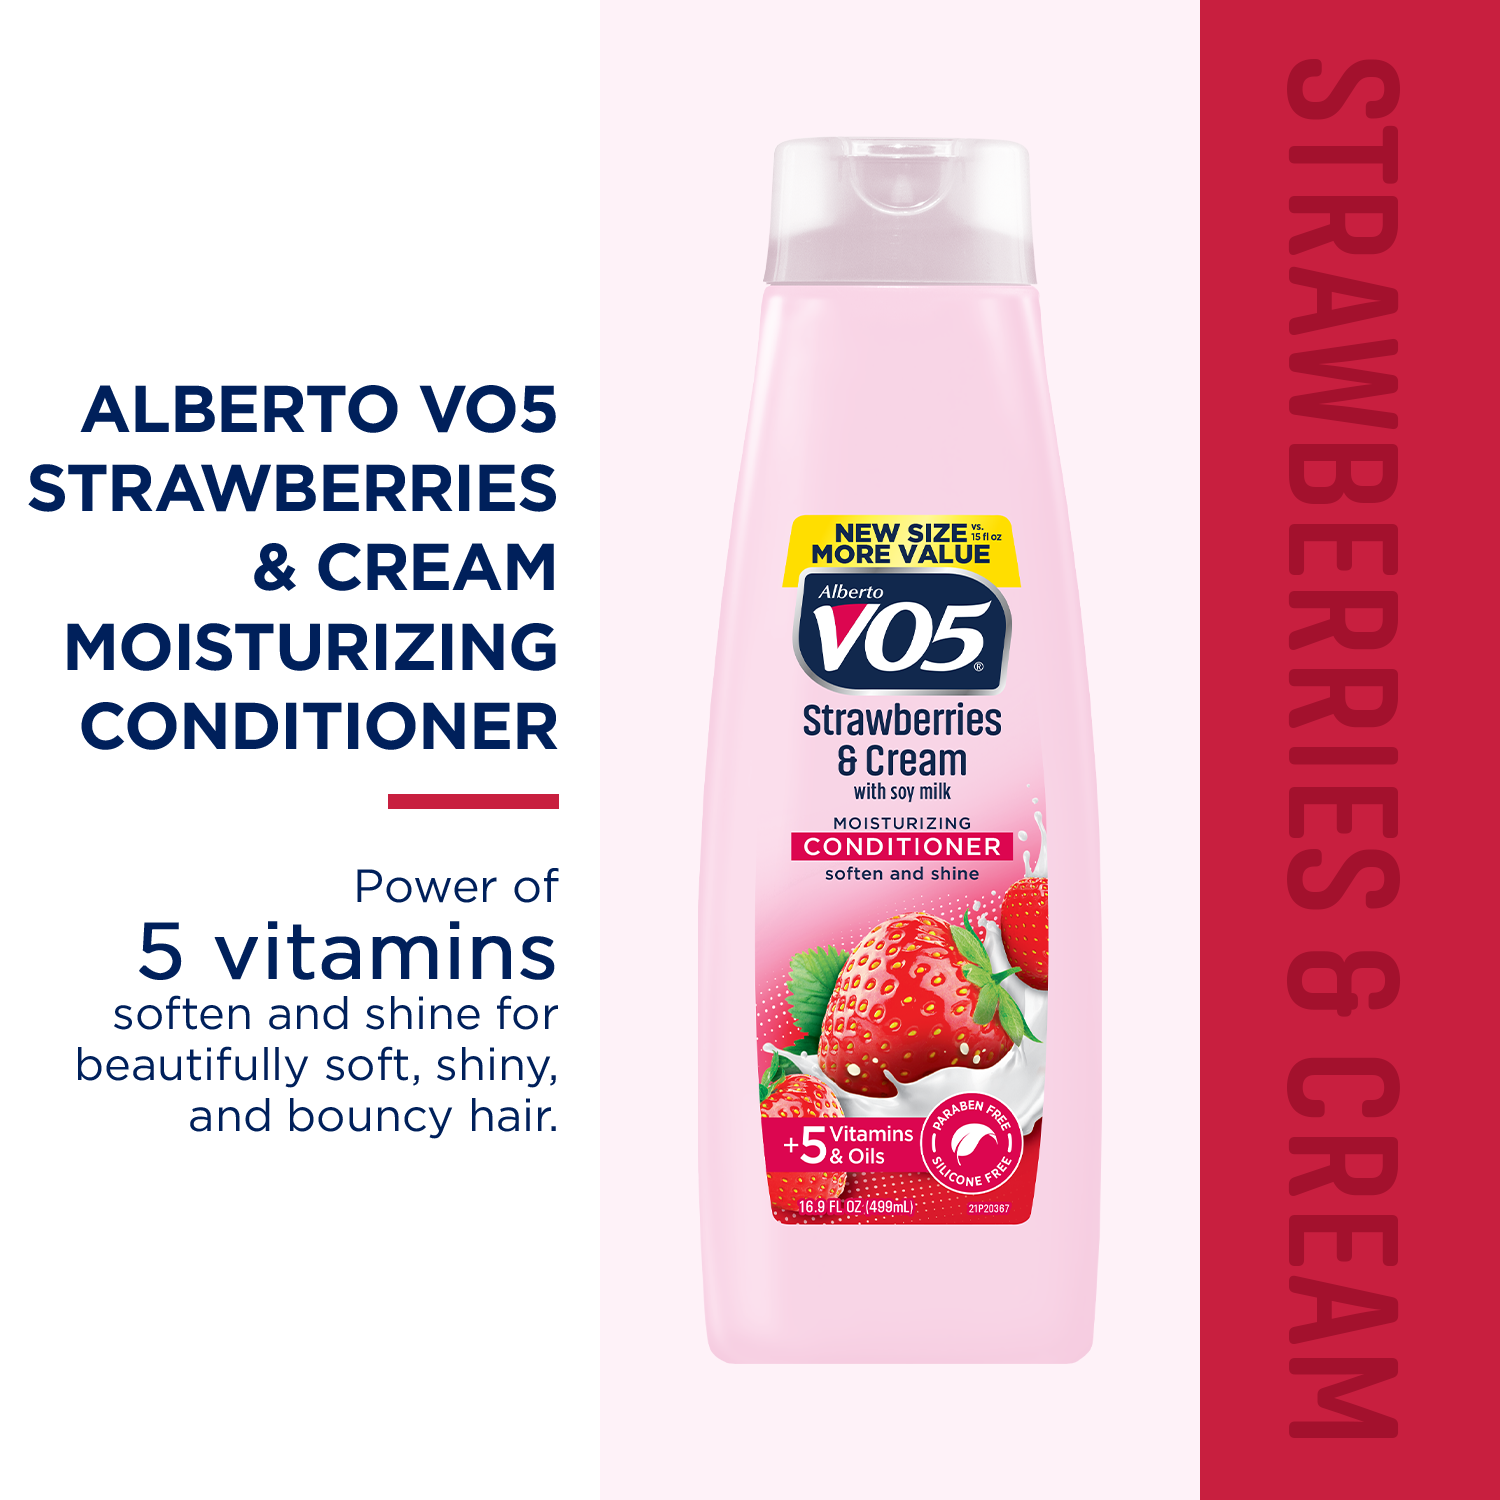 Alberto VO5 Strawberries & Cream Moisturizing Conditioner, for All Hair Types, 16.9 fl oz - image 3 of 6